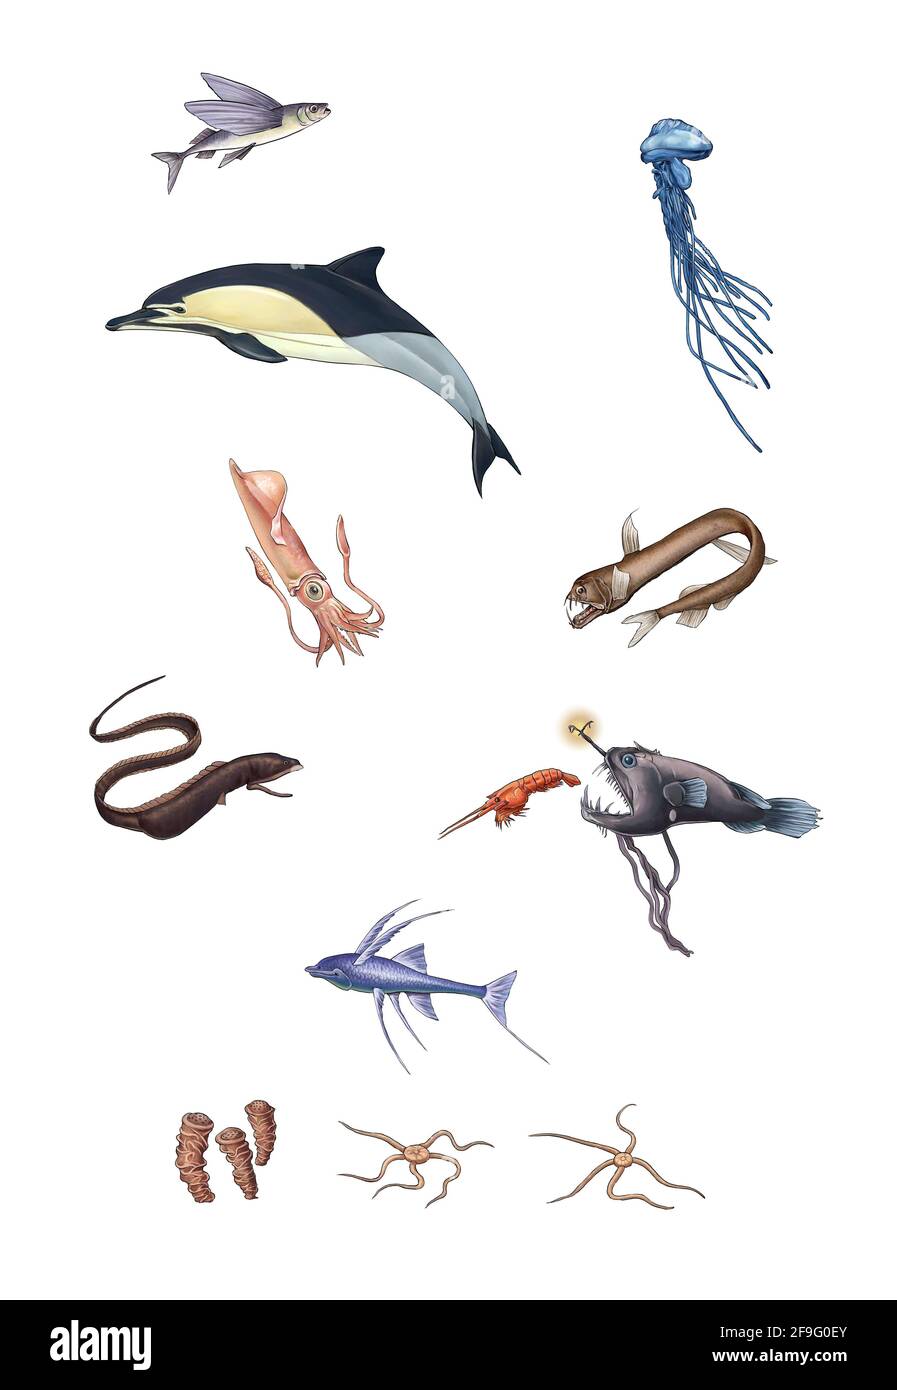 realistic illustration of sea creatures Stock Photo